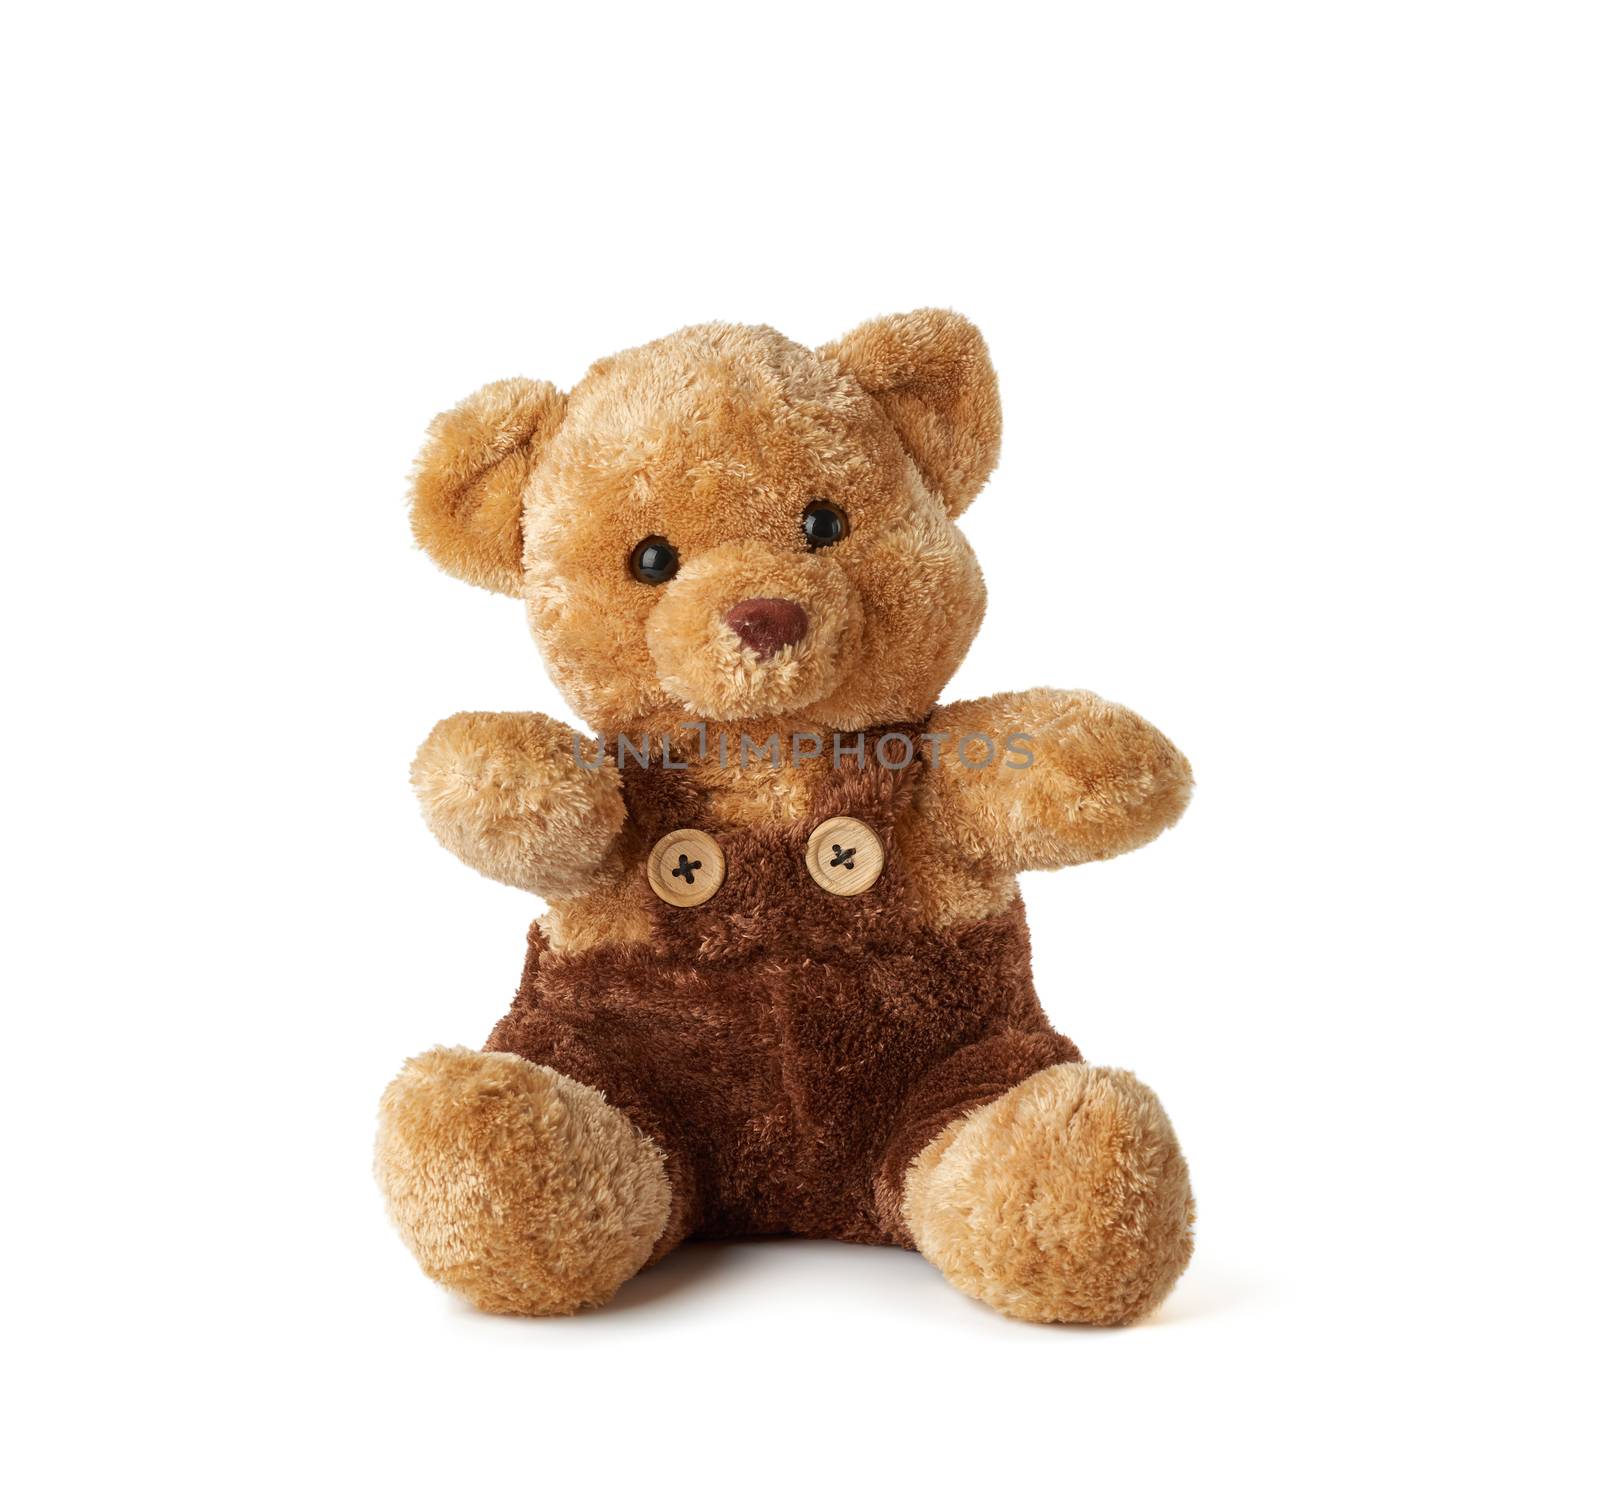 brown teddy bear sitting on a white background by ndanko